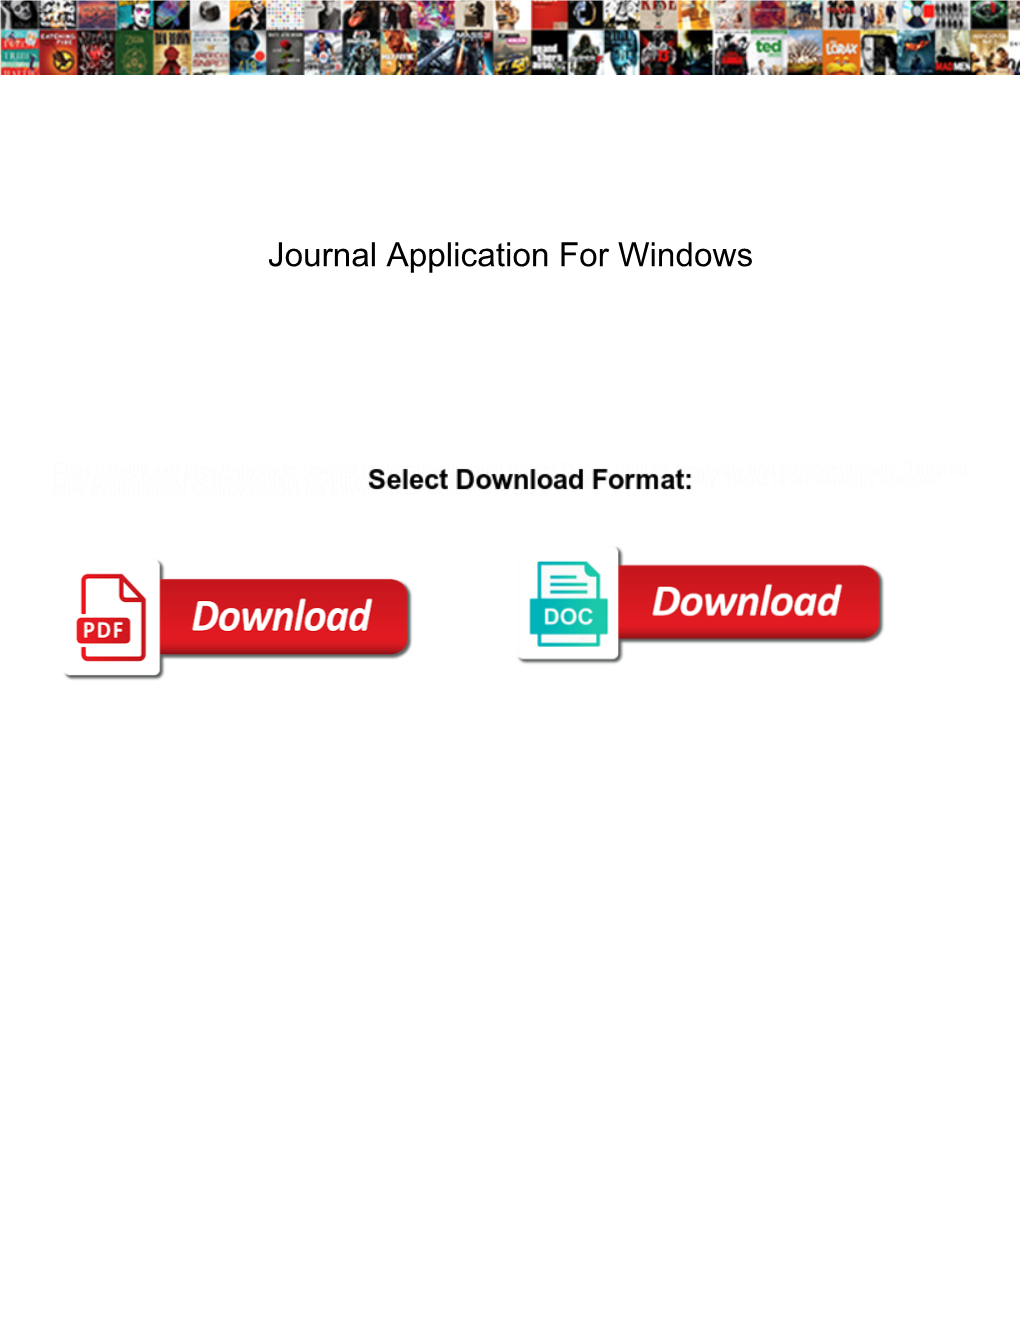 Journal Application for Windows